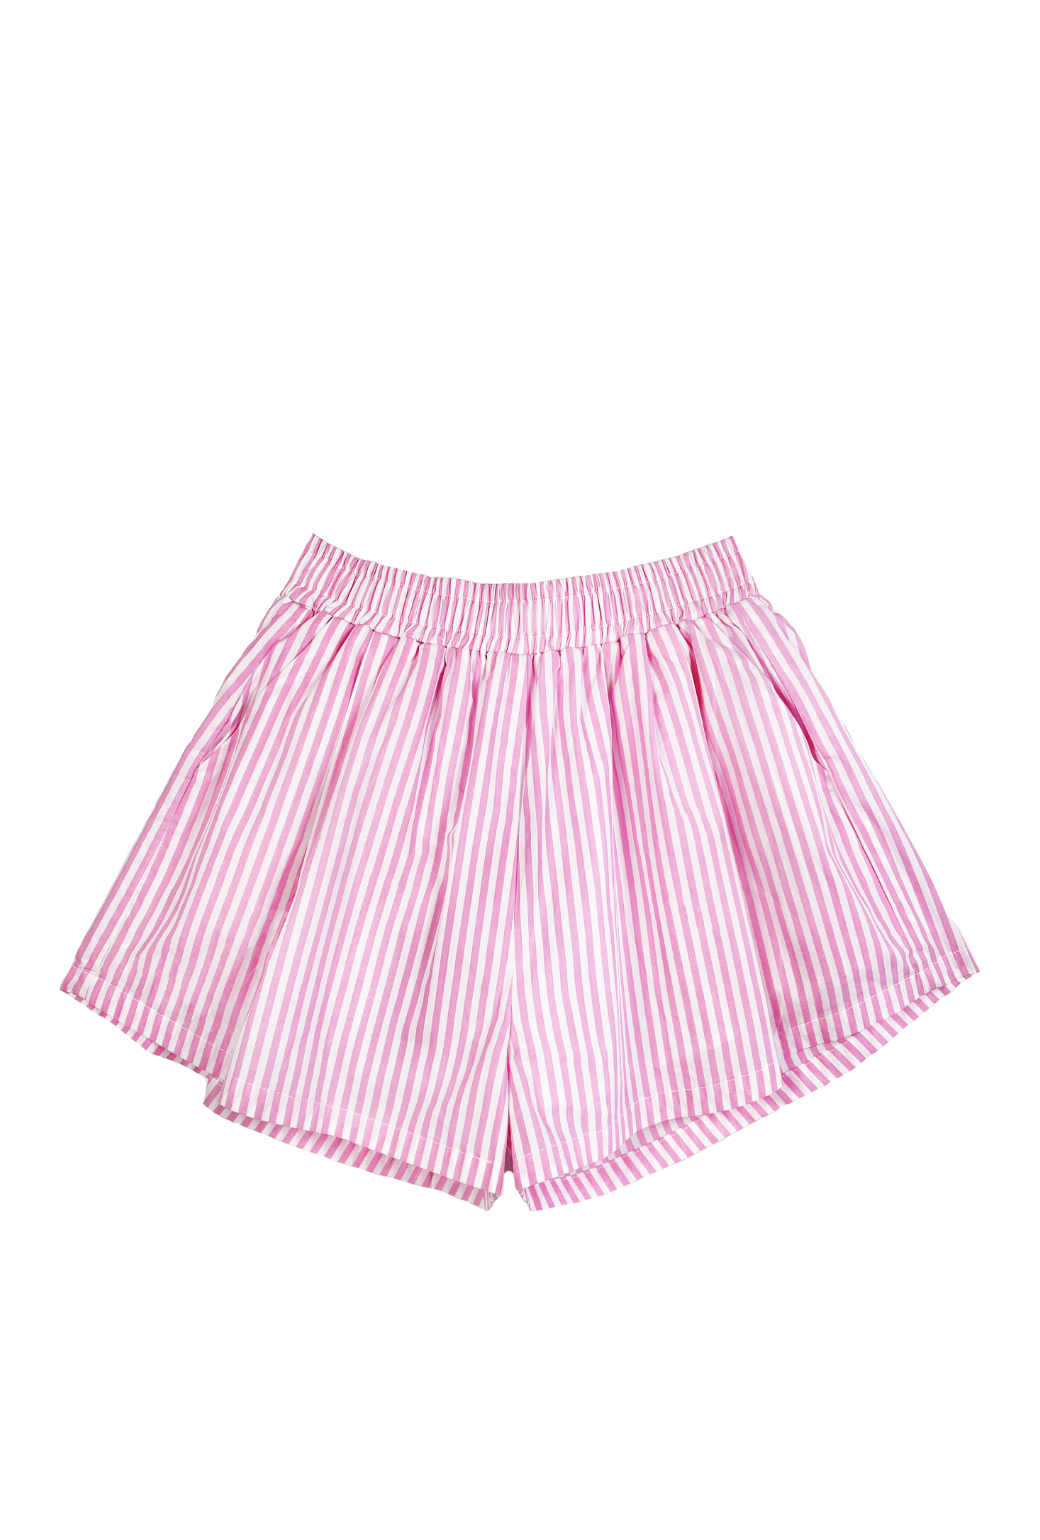 - Everyday Stripe Shorts Sale - BURU Pink – Final